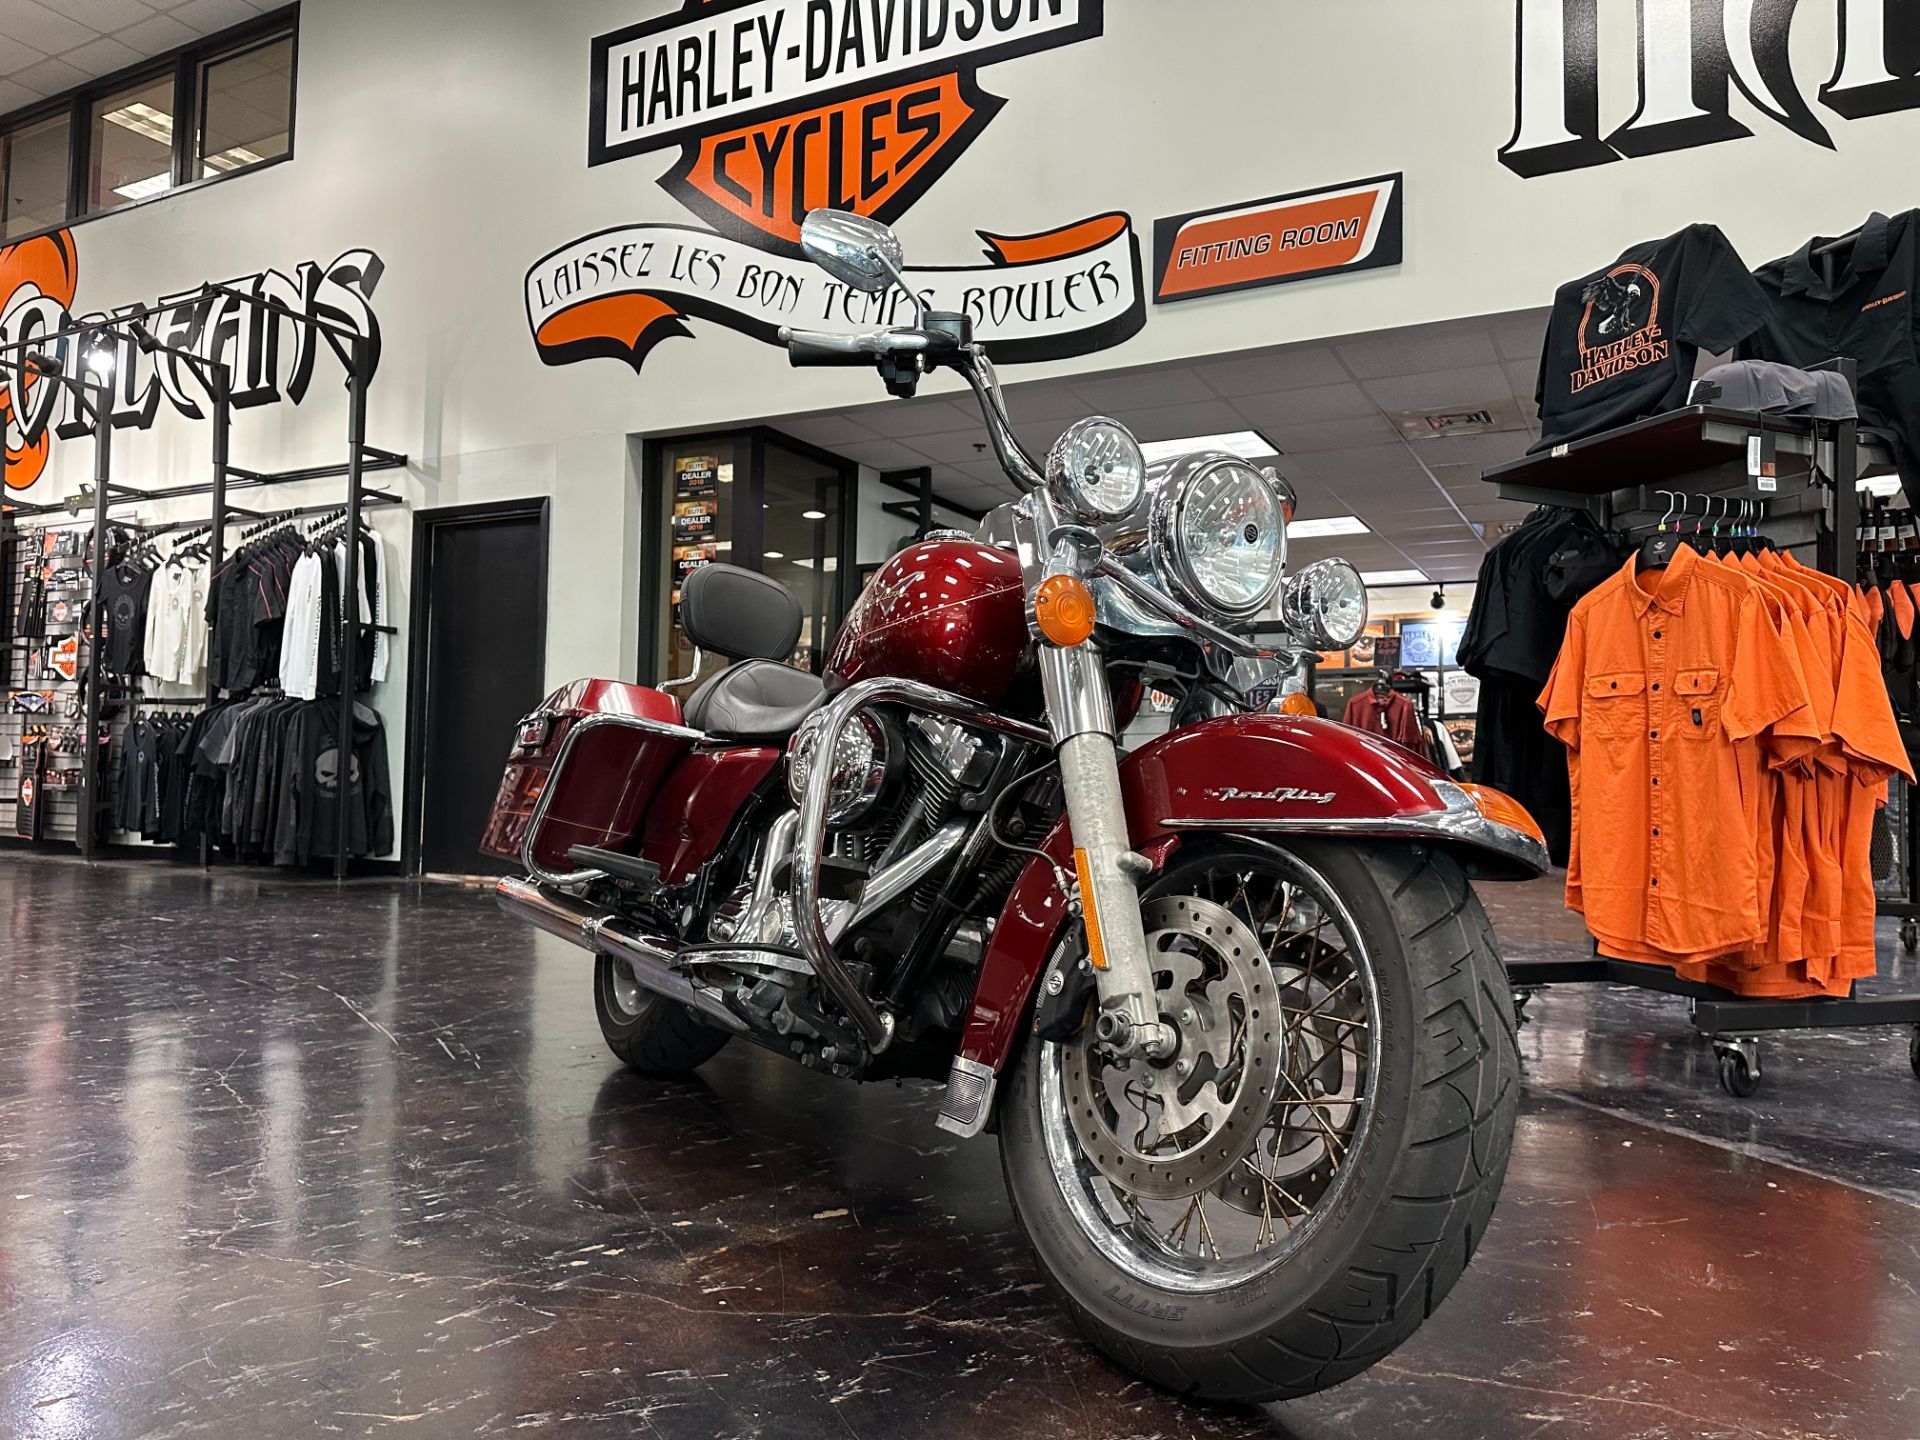 2009 Harley-Davidson Road King® in Metairie, Louisiana - Photo 1